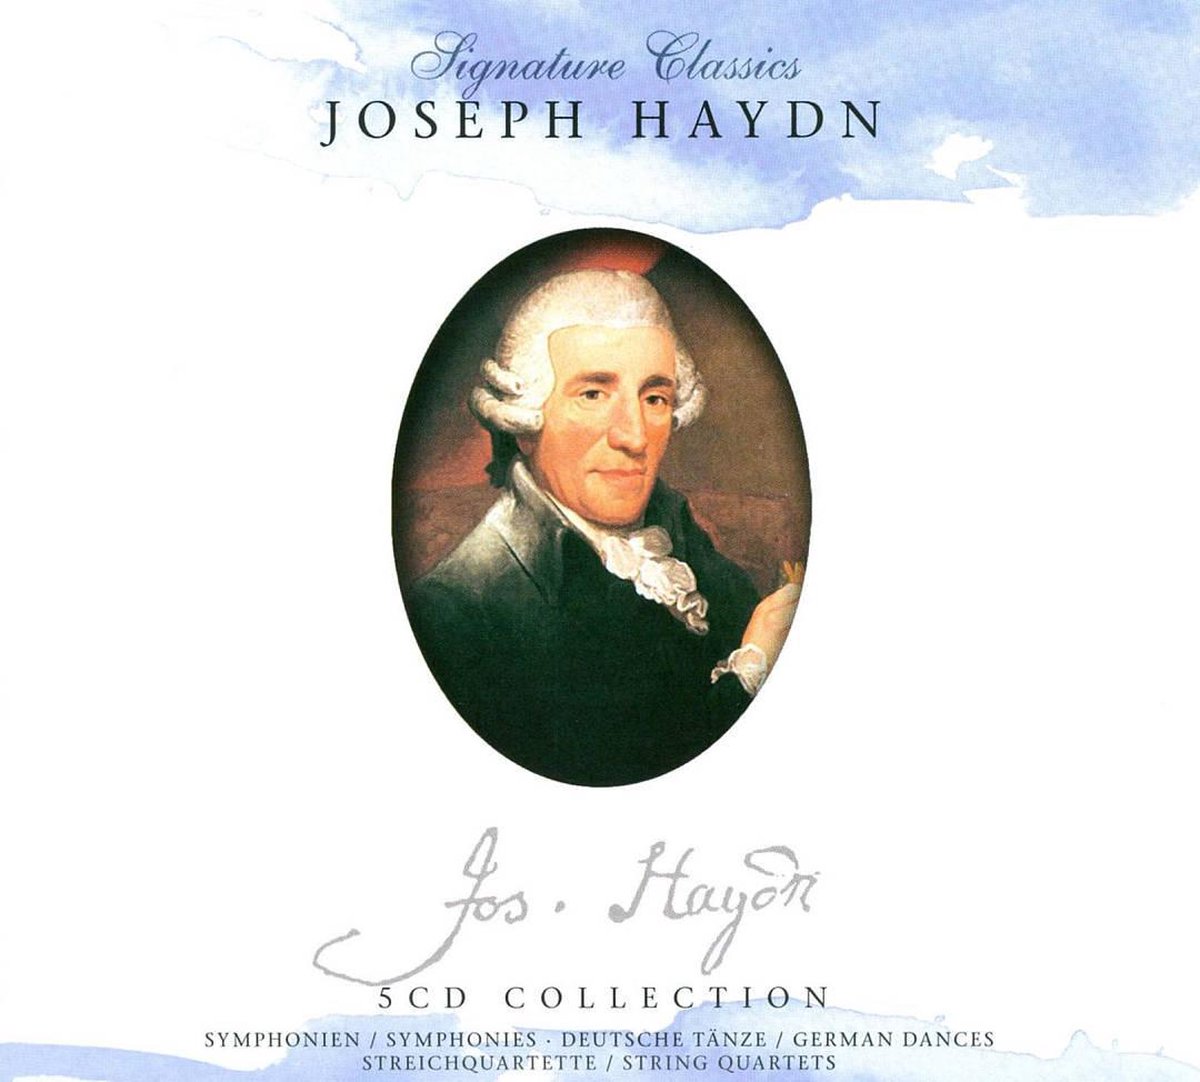 Symphonies - J. Haydn